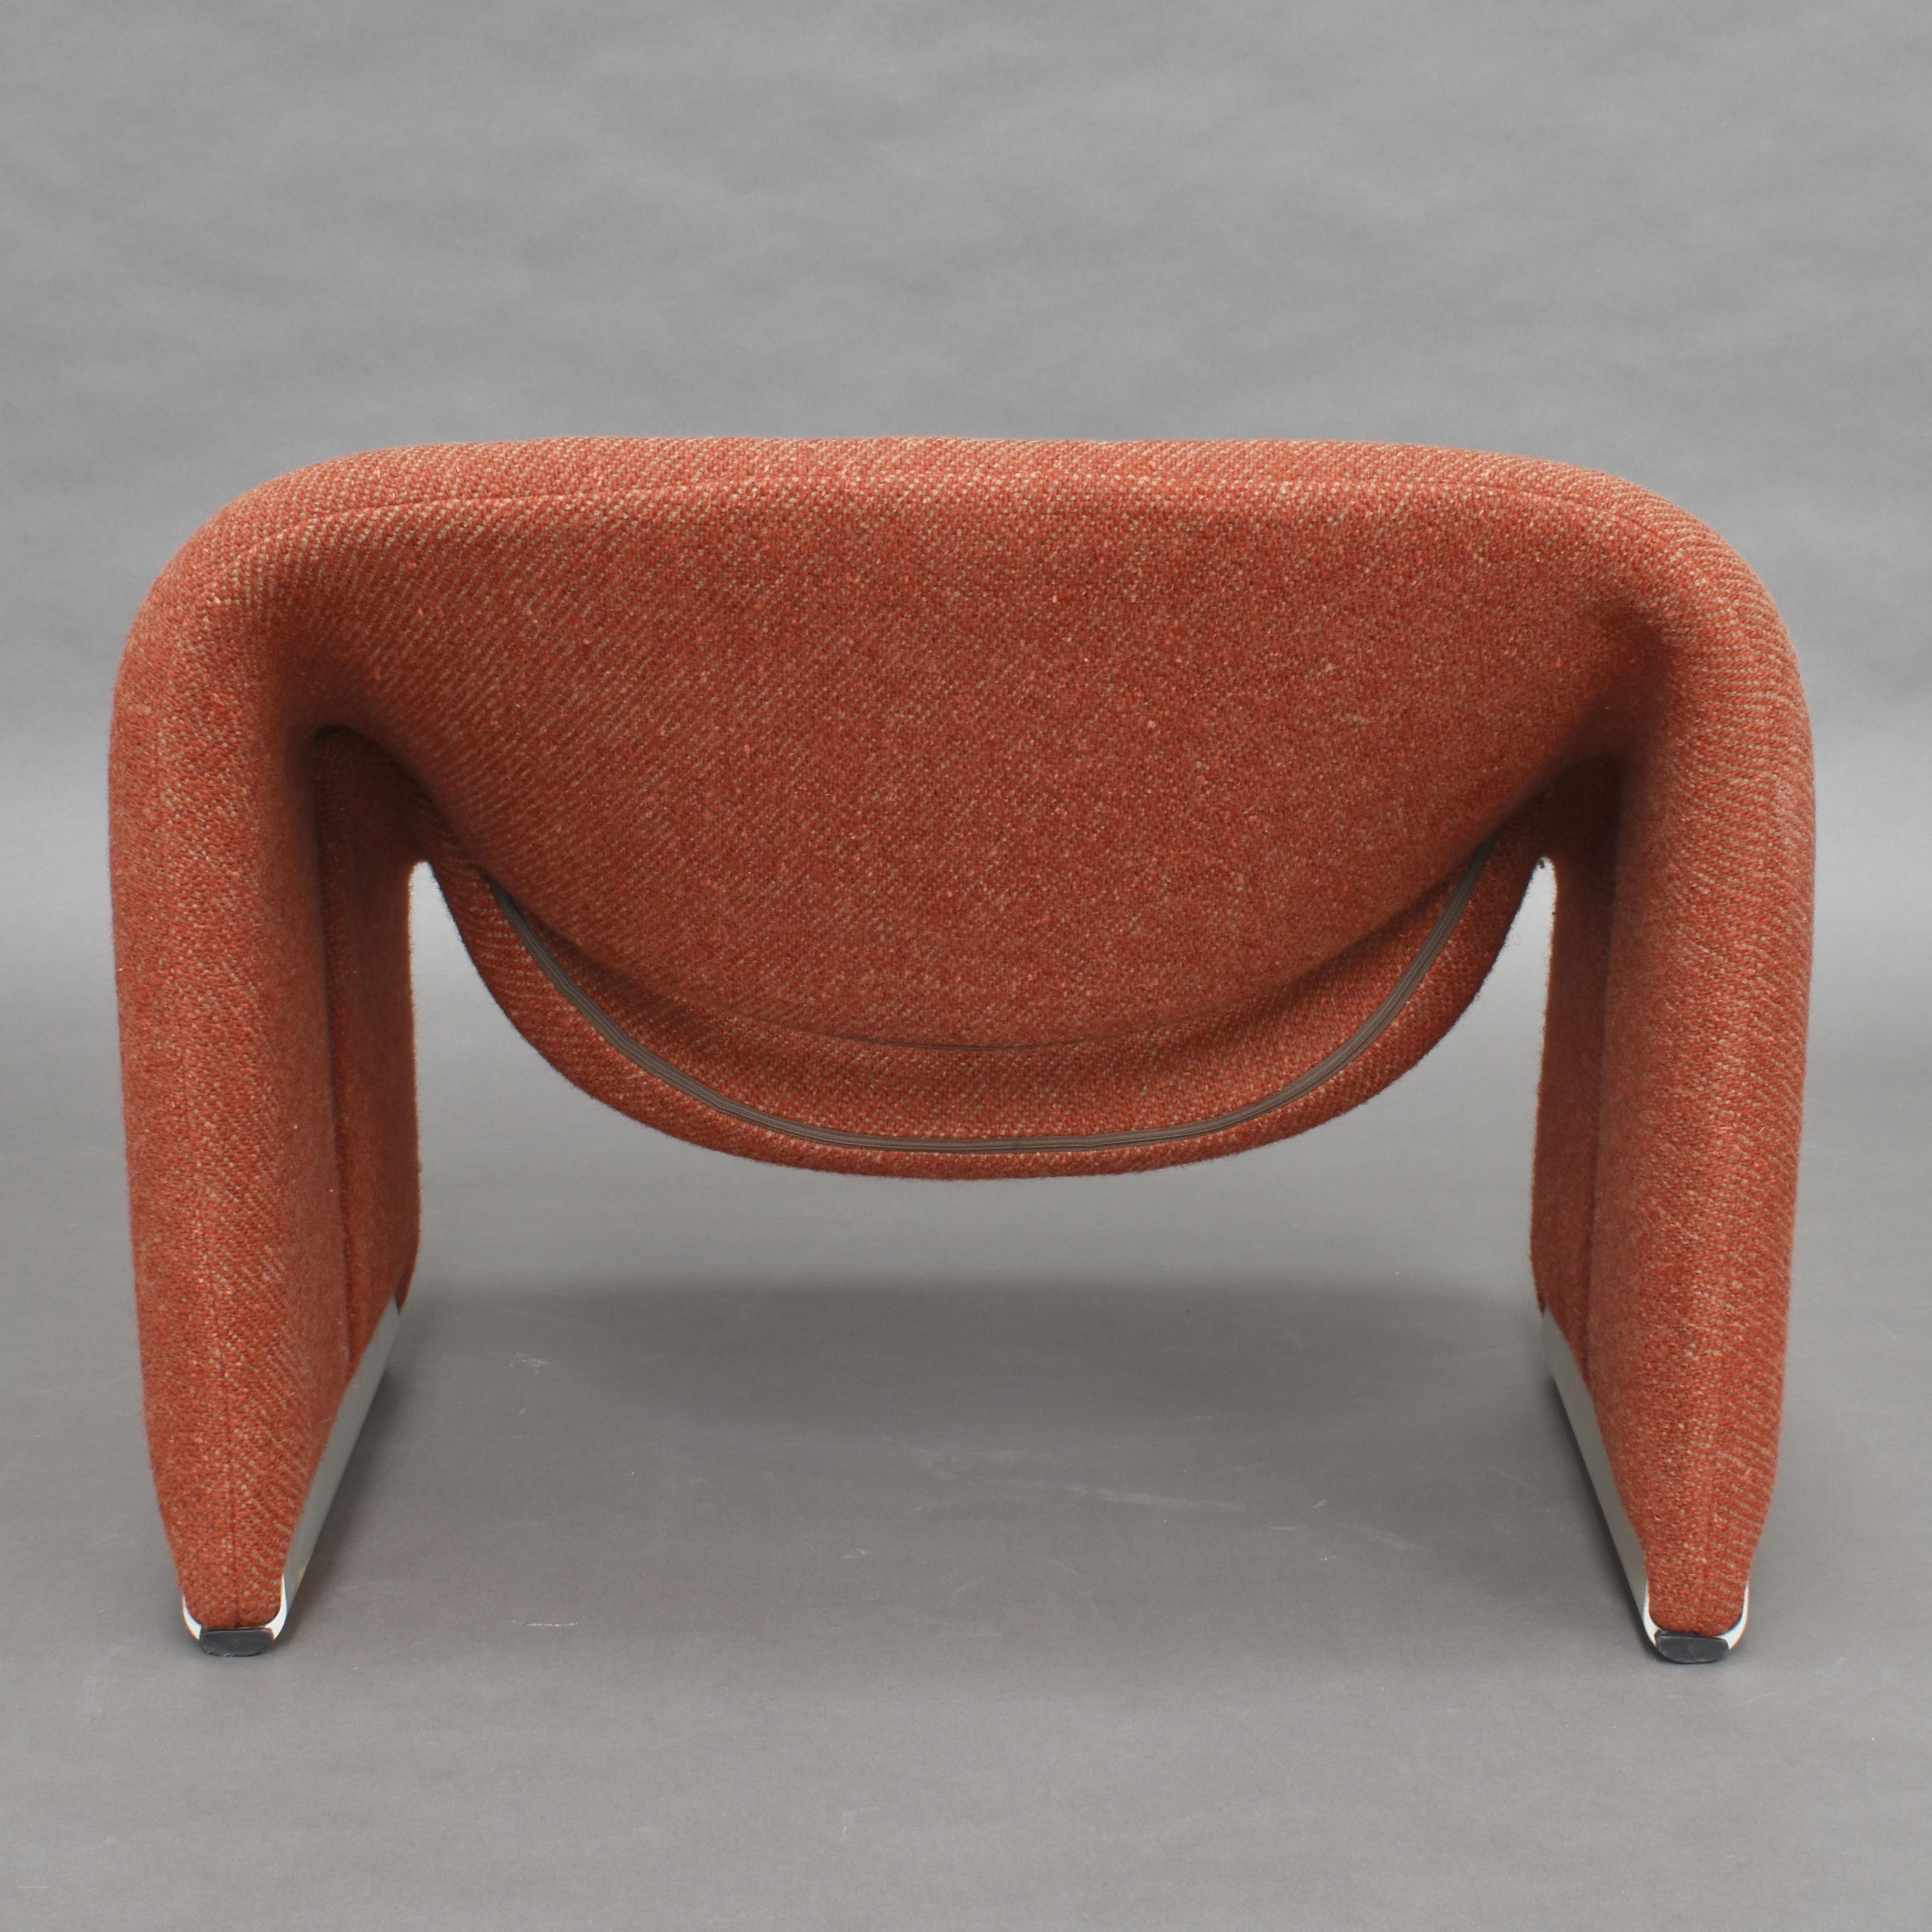 Pierre Paulin F598 Groovy Lounge Chair for Artifort, Netherlands, 1972 10